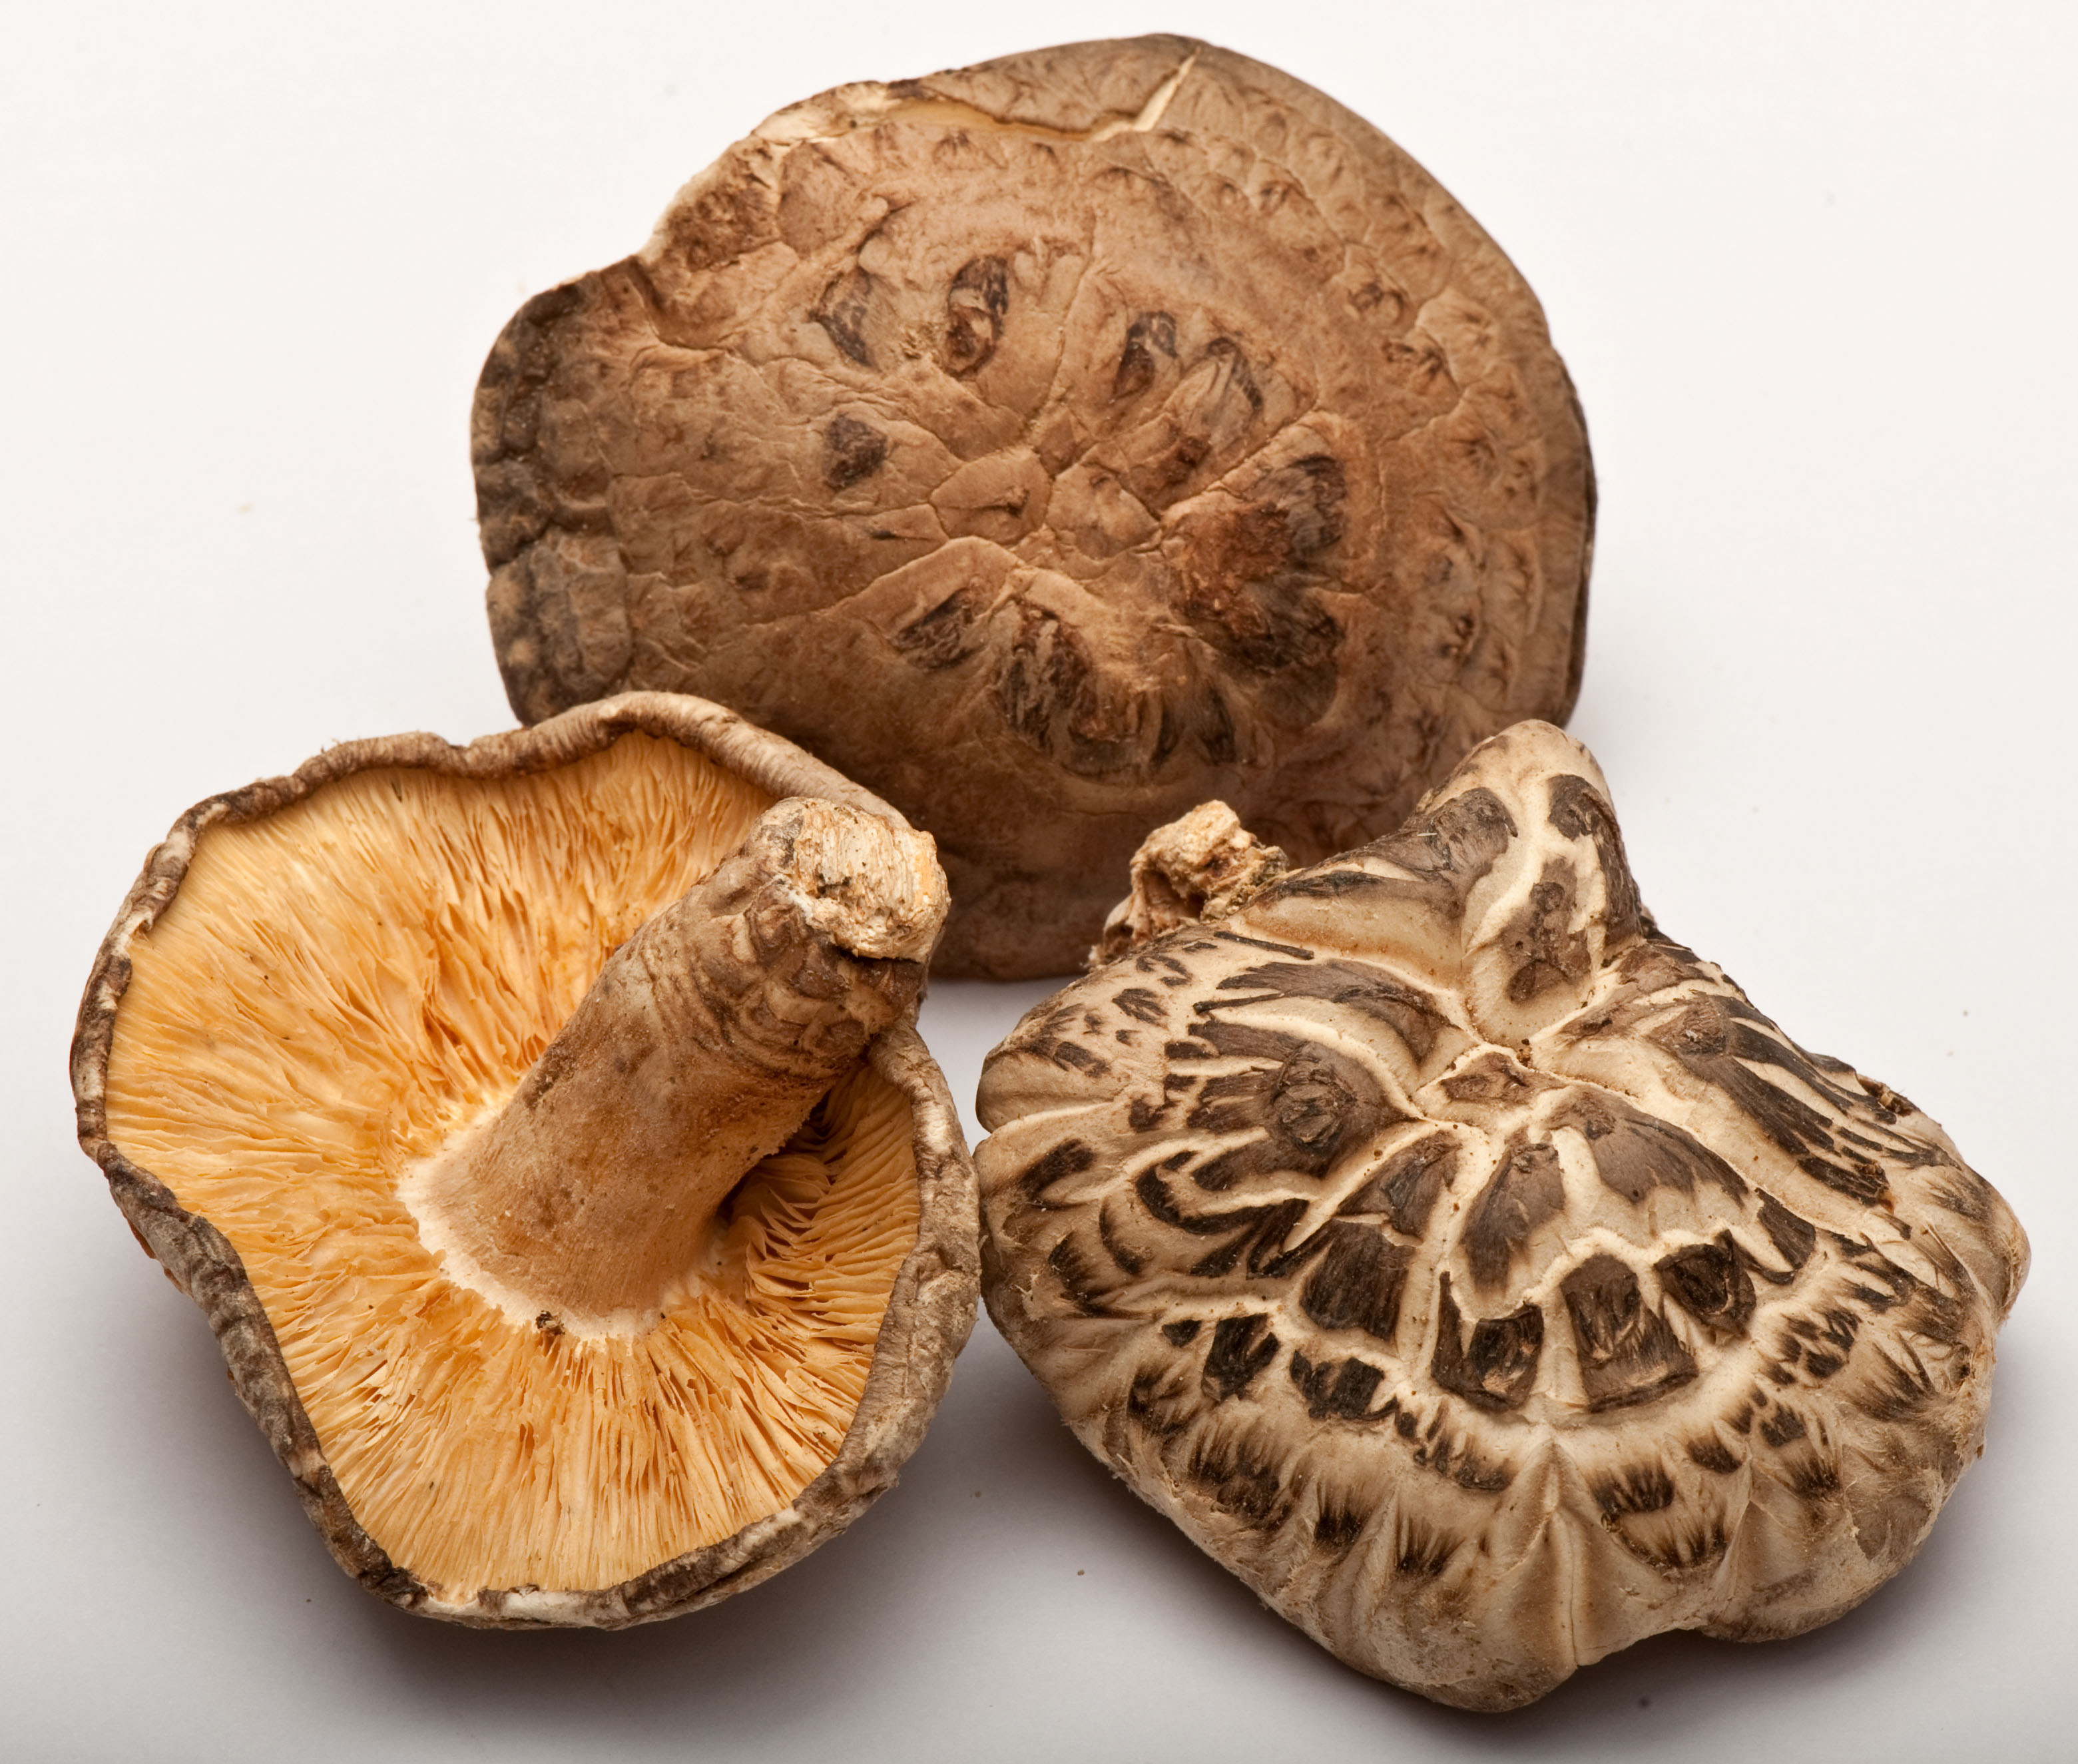 Forage your way into mushroom season | The Japan Times